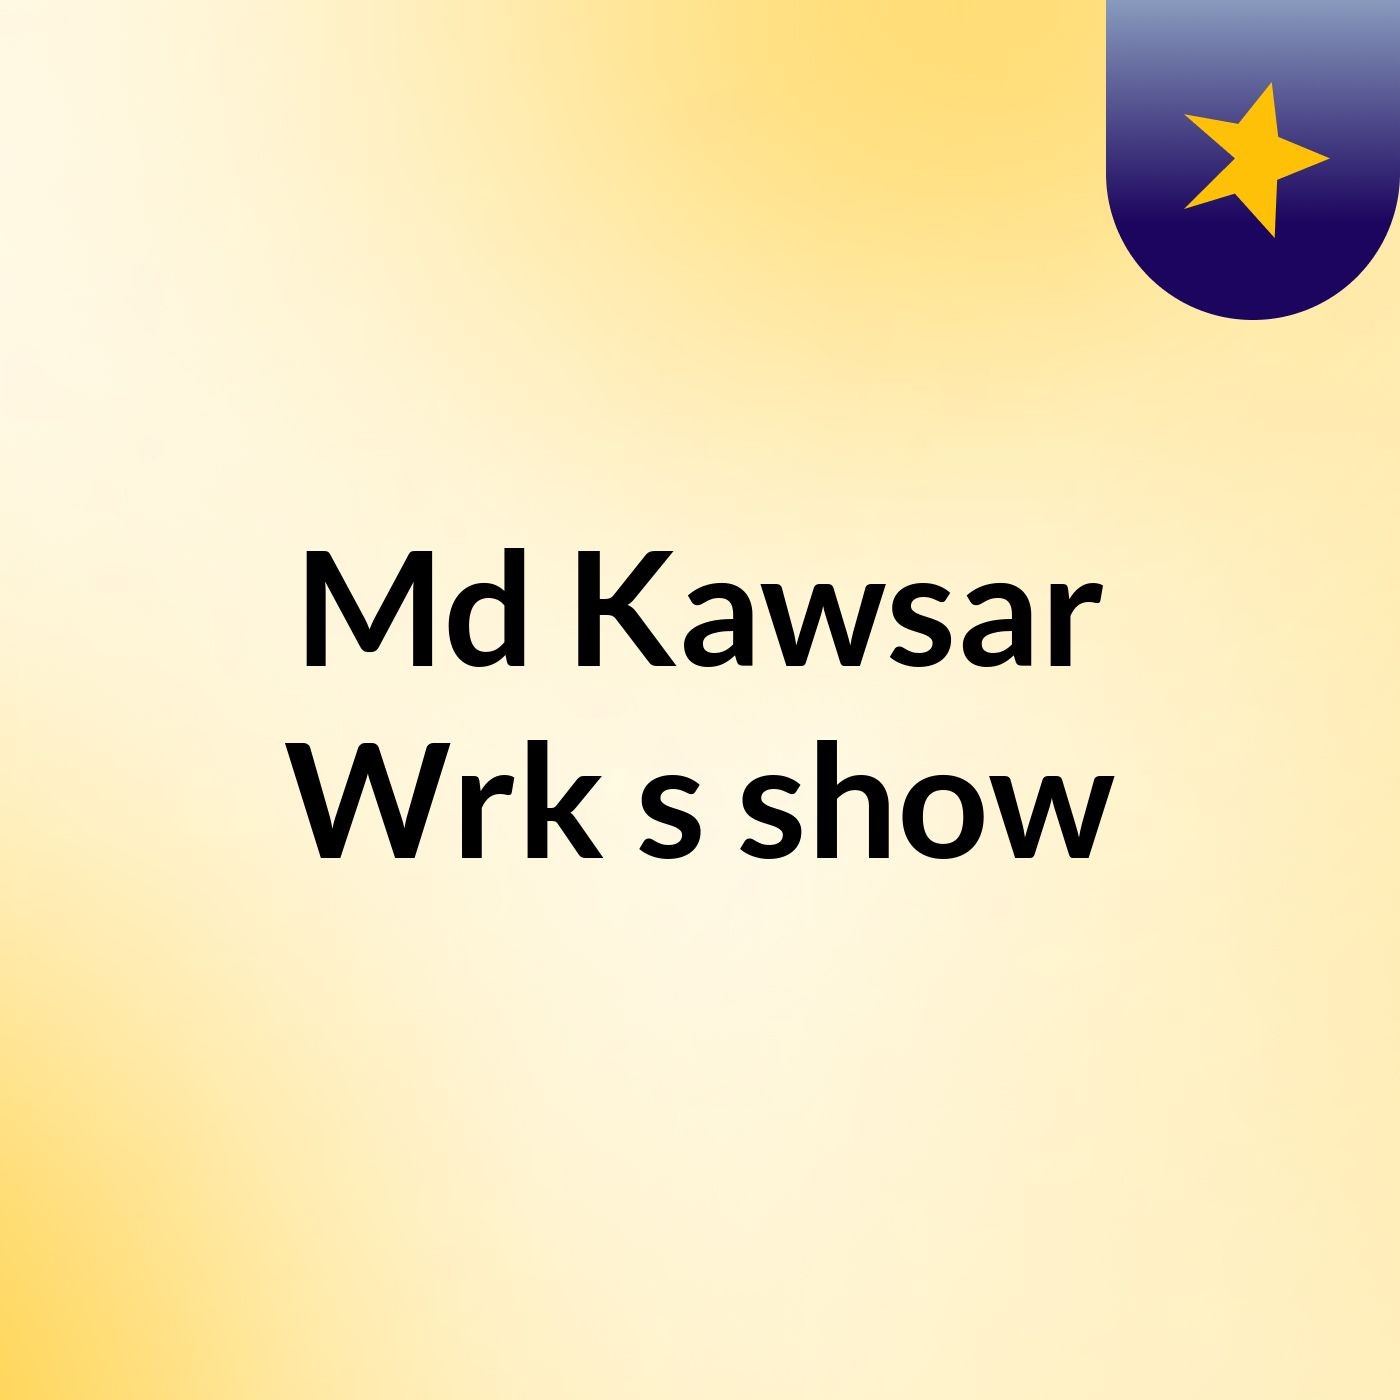 Md Kawsar Wrk's show